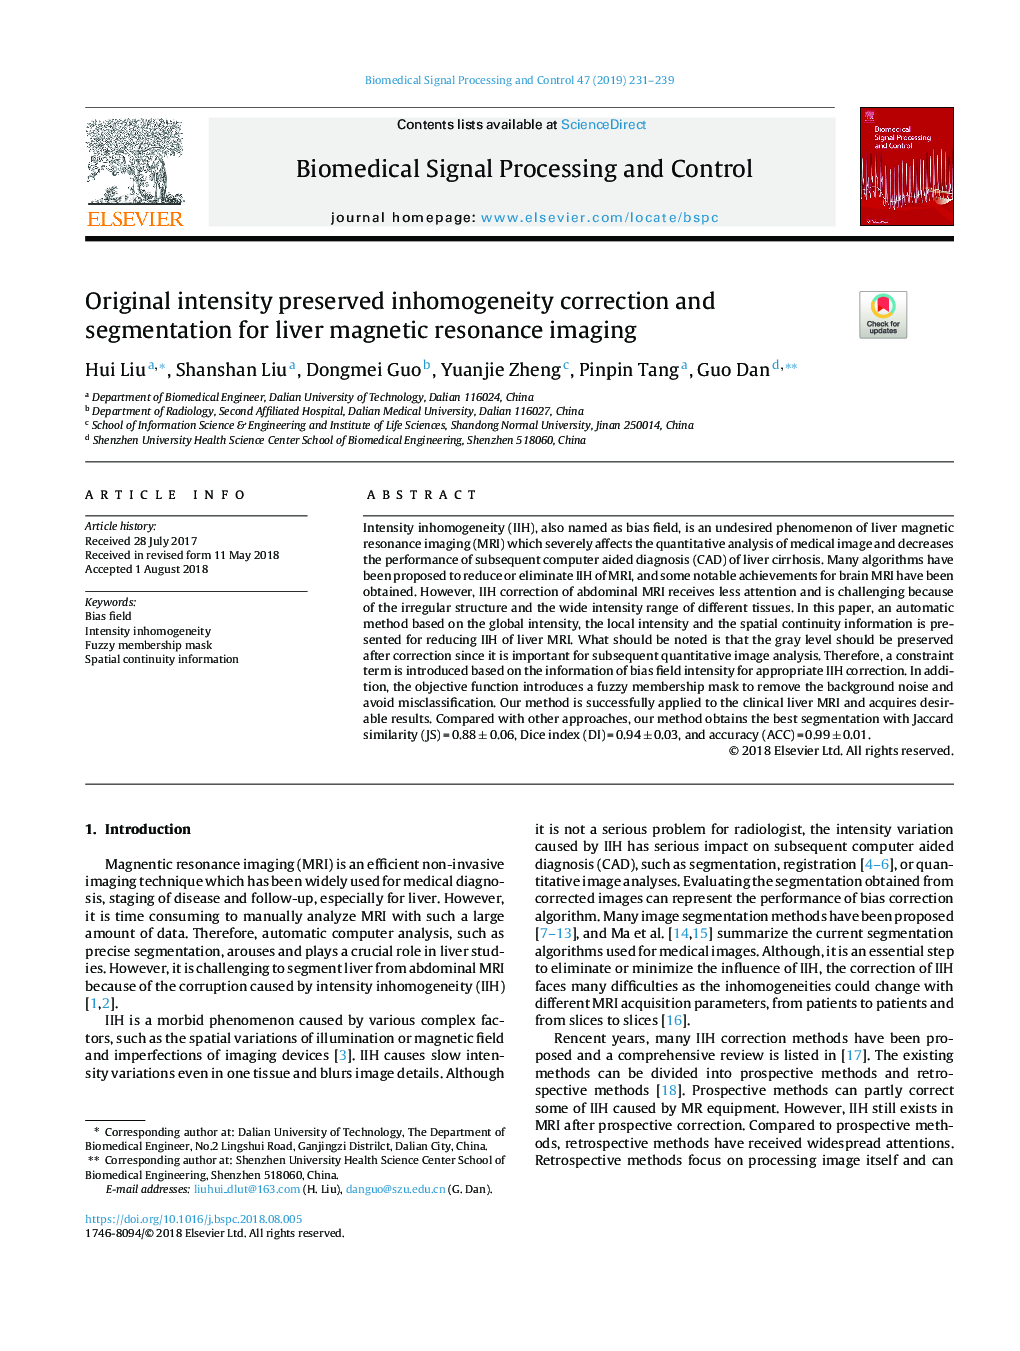 Original intensity preserved inhomogeneity correction and segmentation for liver magnetic resonance imaging